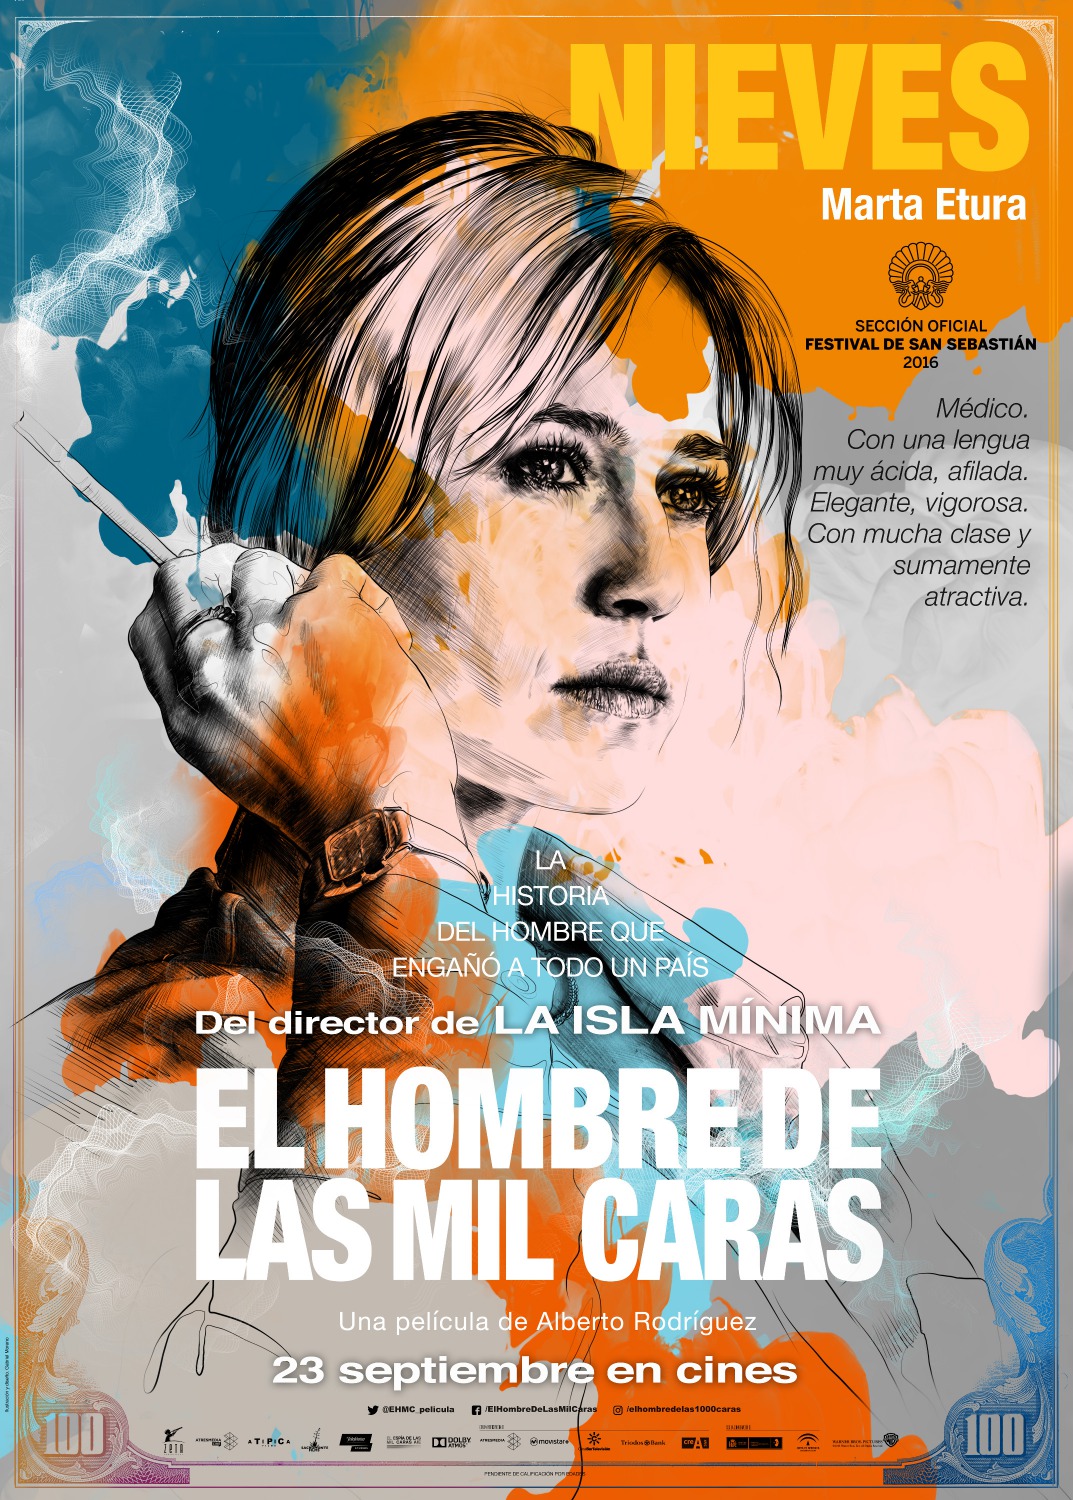 Extra Large Movie Poster Image for El hombre de las mil caras (#4 of 7)